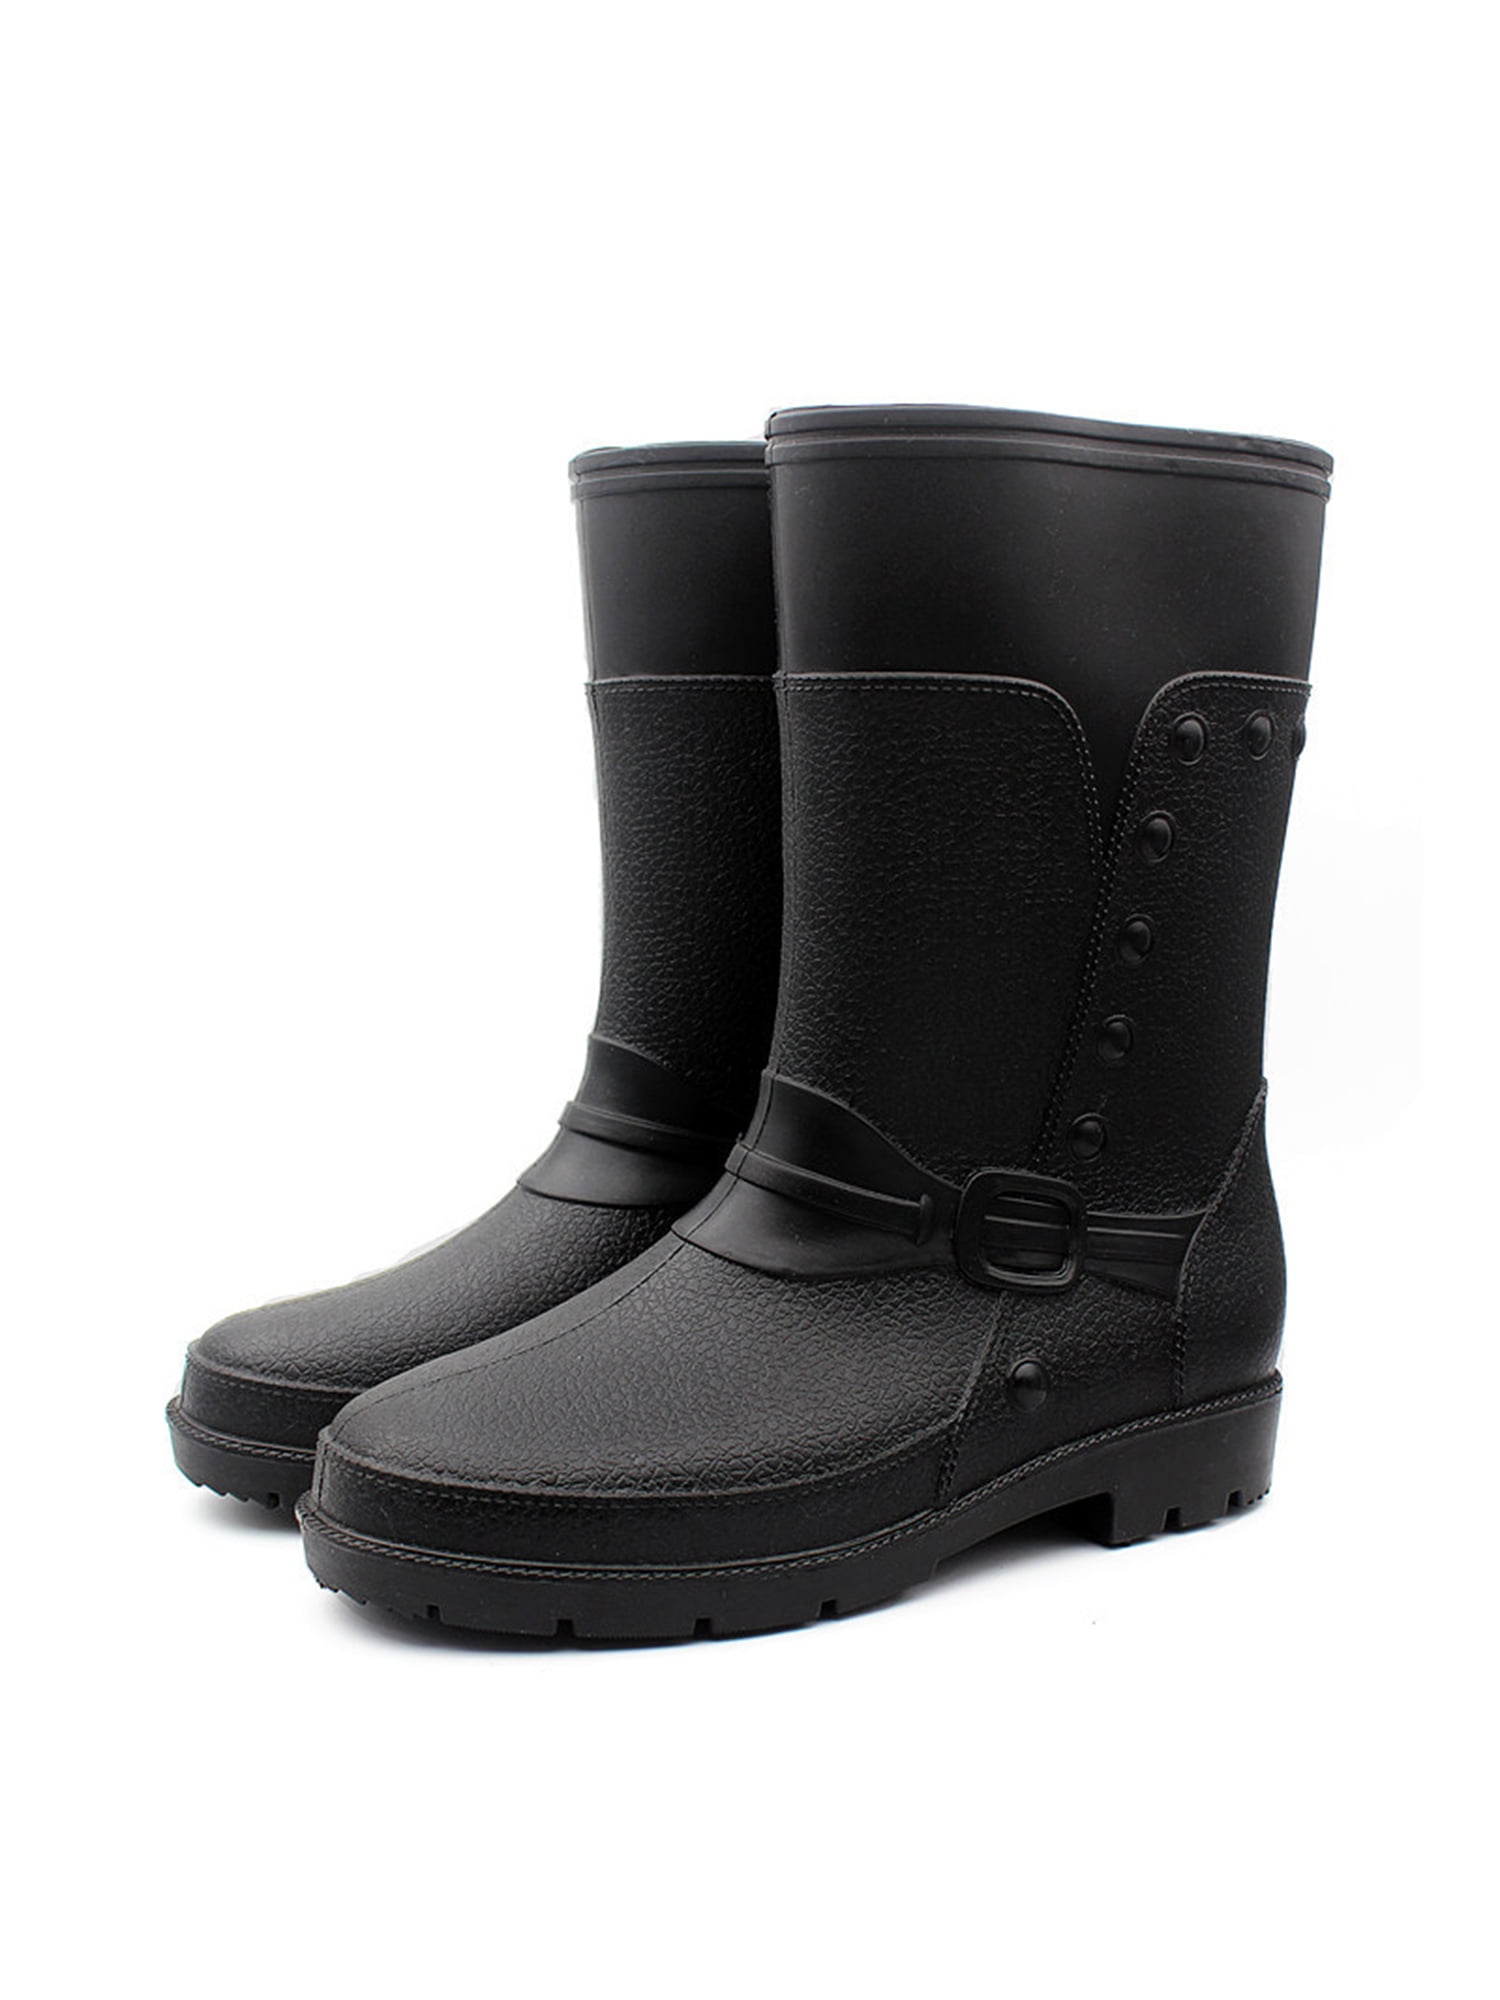 GENILU Men's Rain Boots Wide Calf Rubber Boot Slip Resistant Garden ...